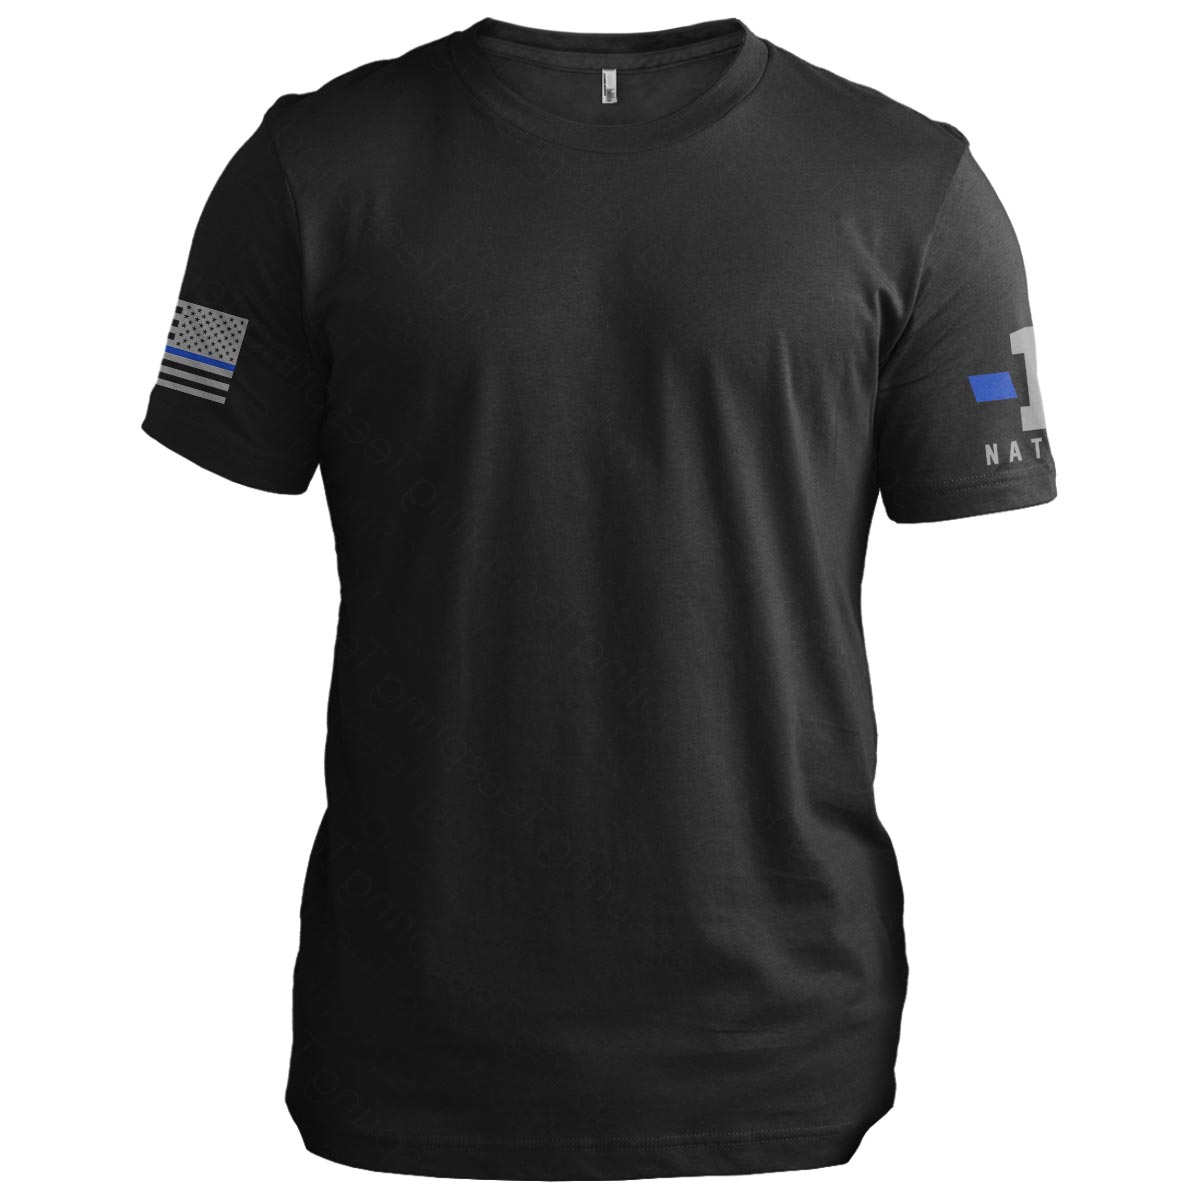 Grunt Style Old No. 76 T-Shirt - 3XL - Black 